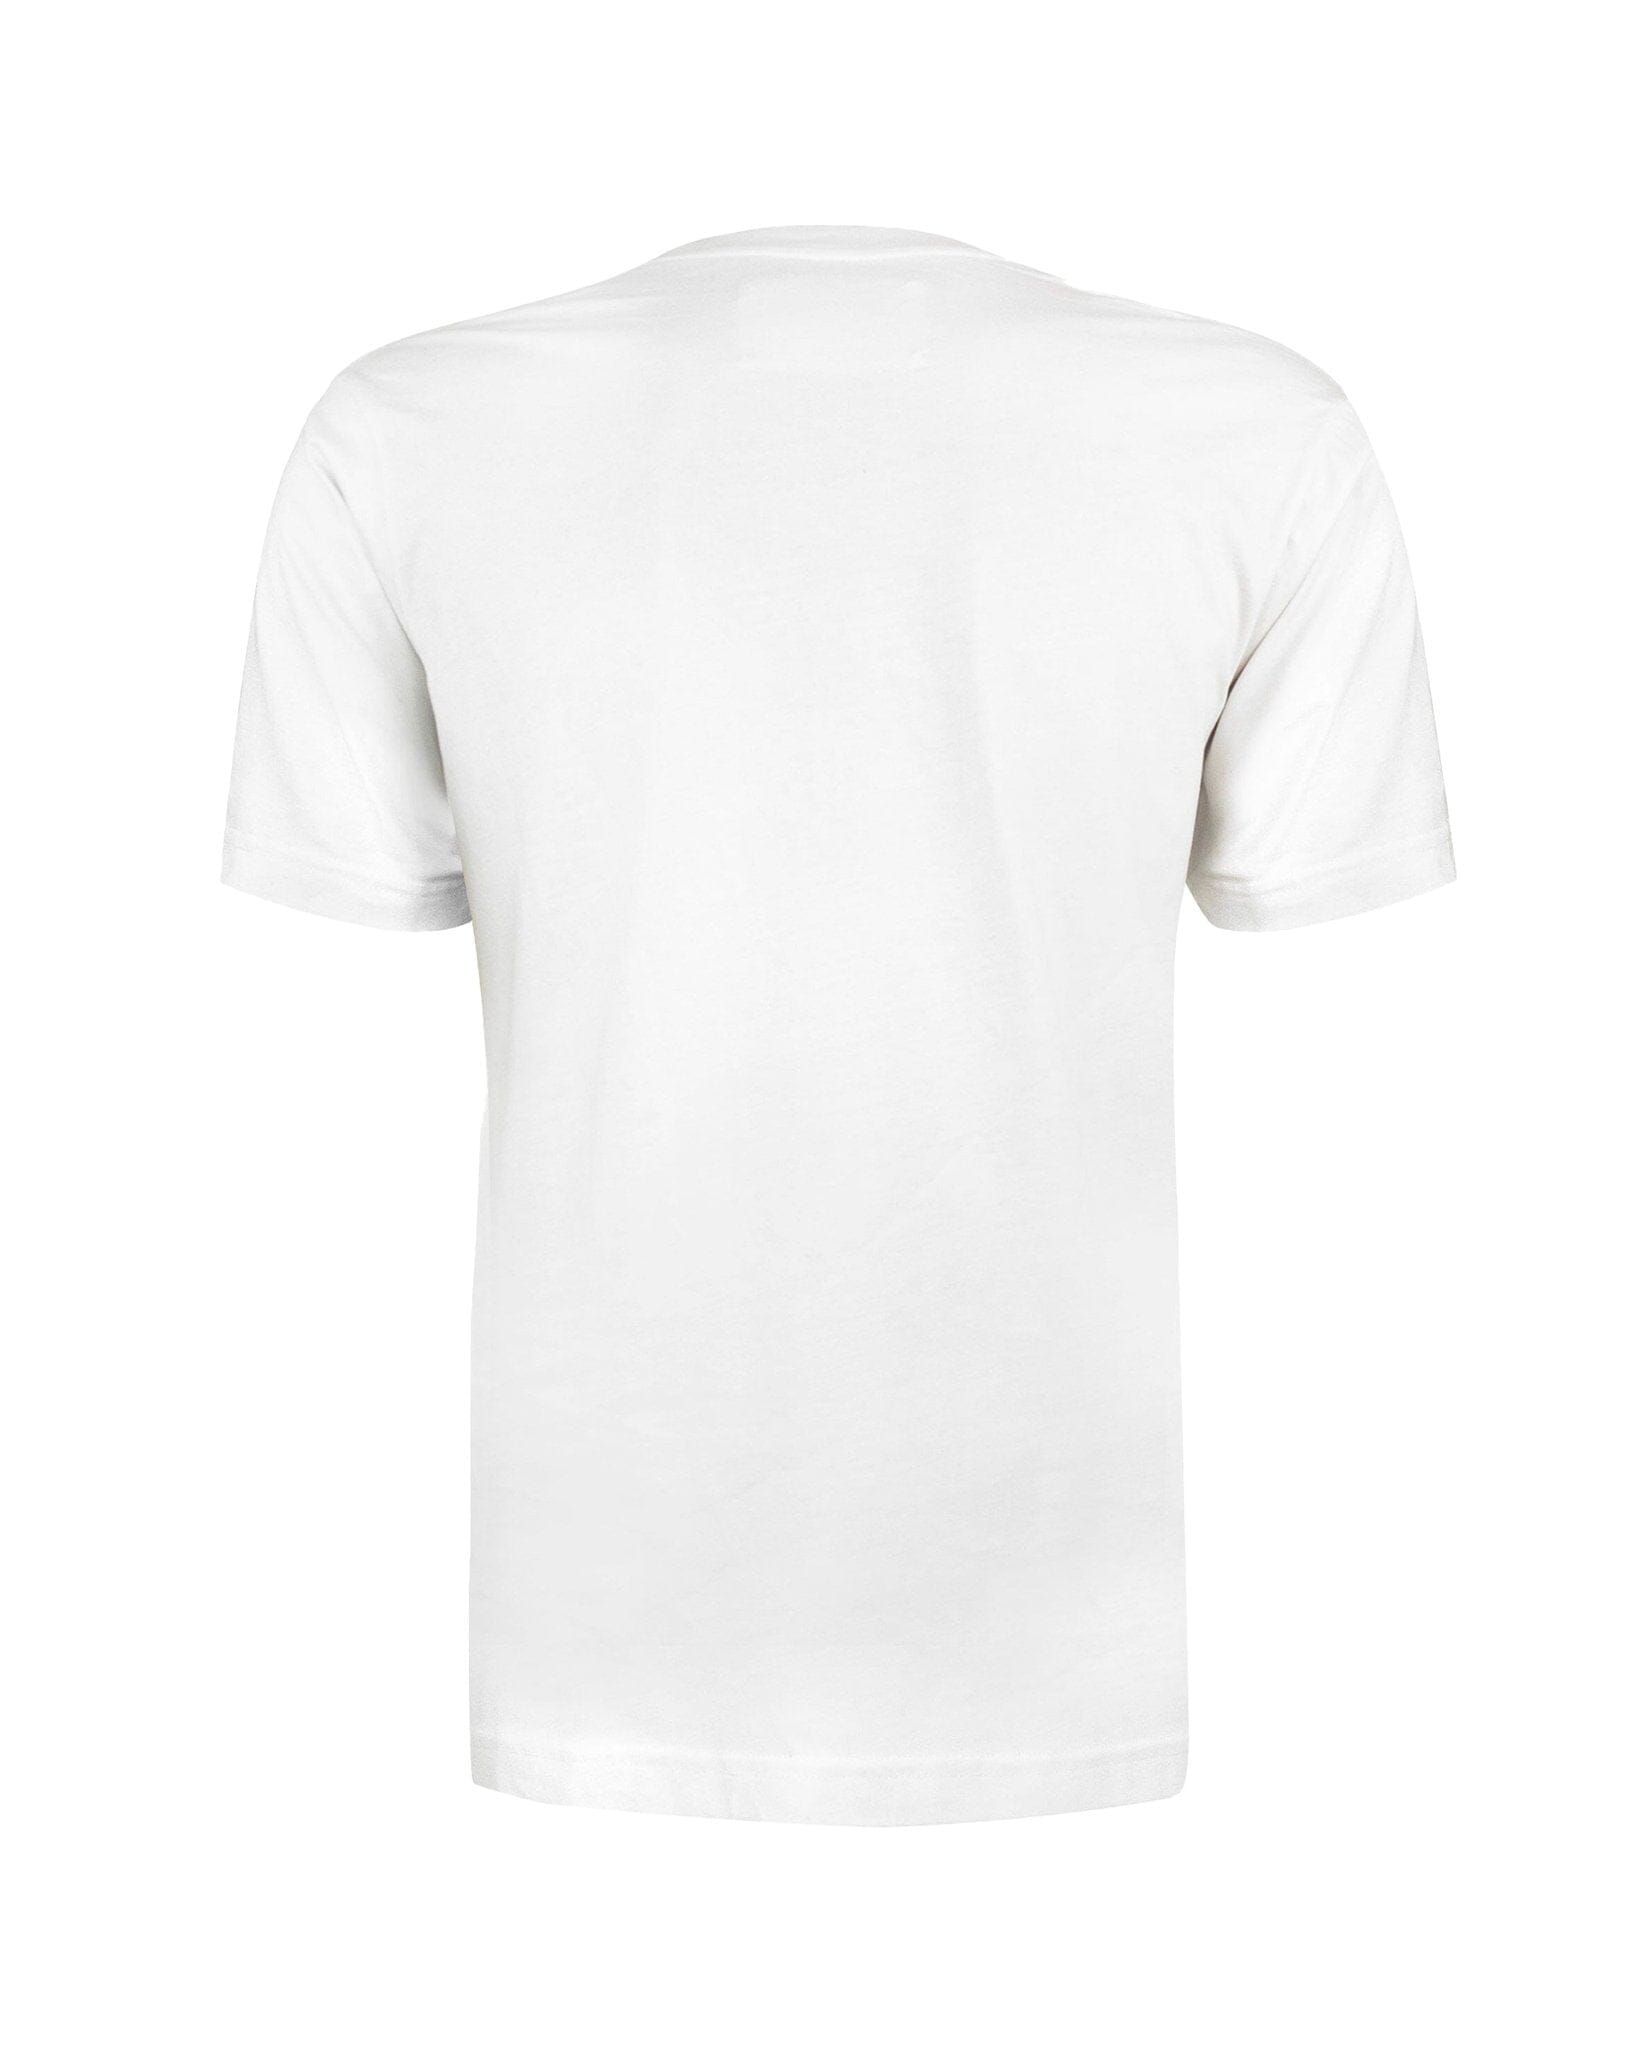 T-shirt regular GRAFFITI white